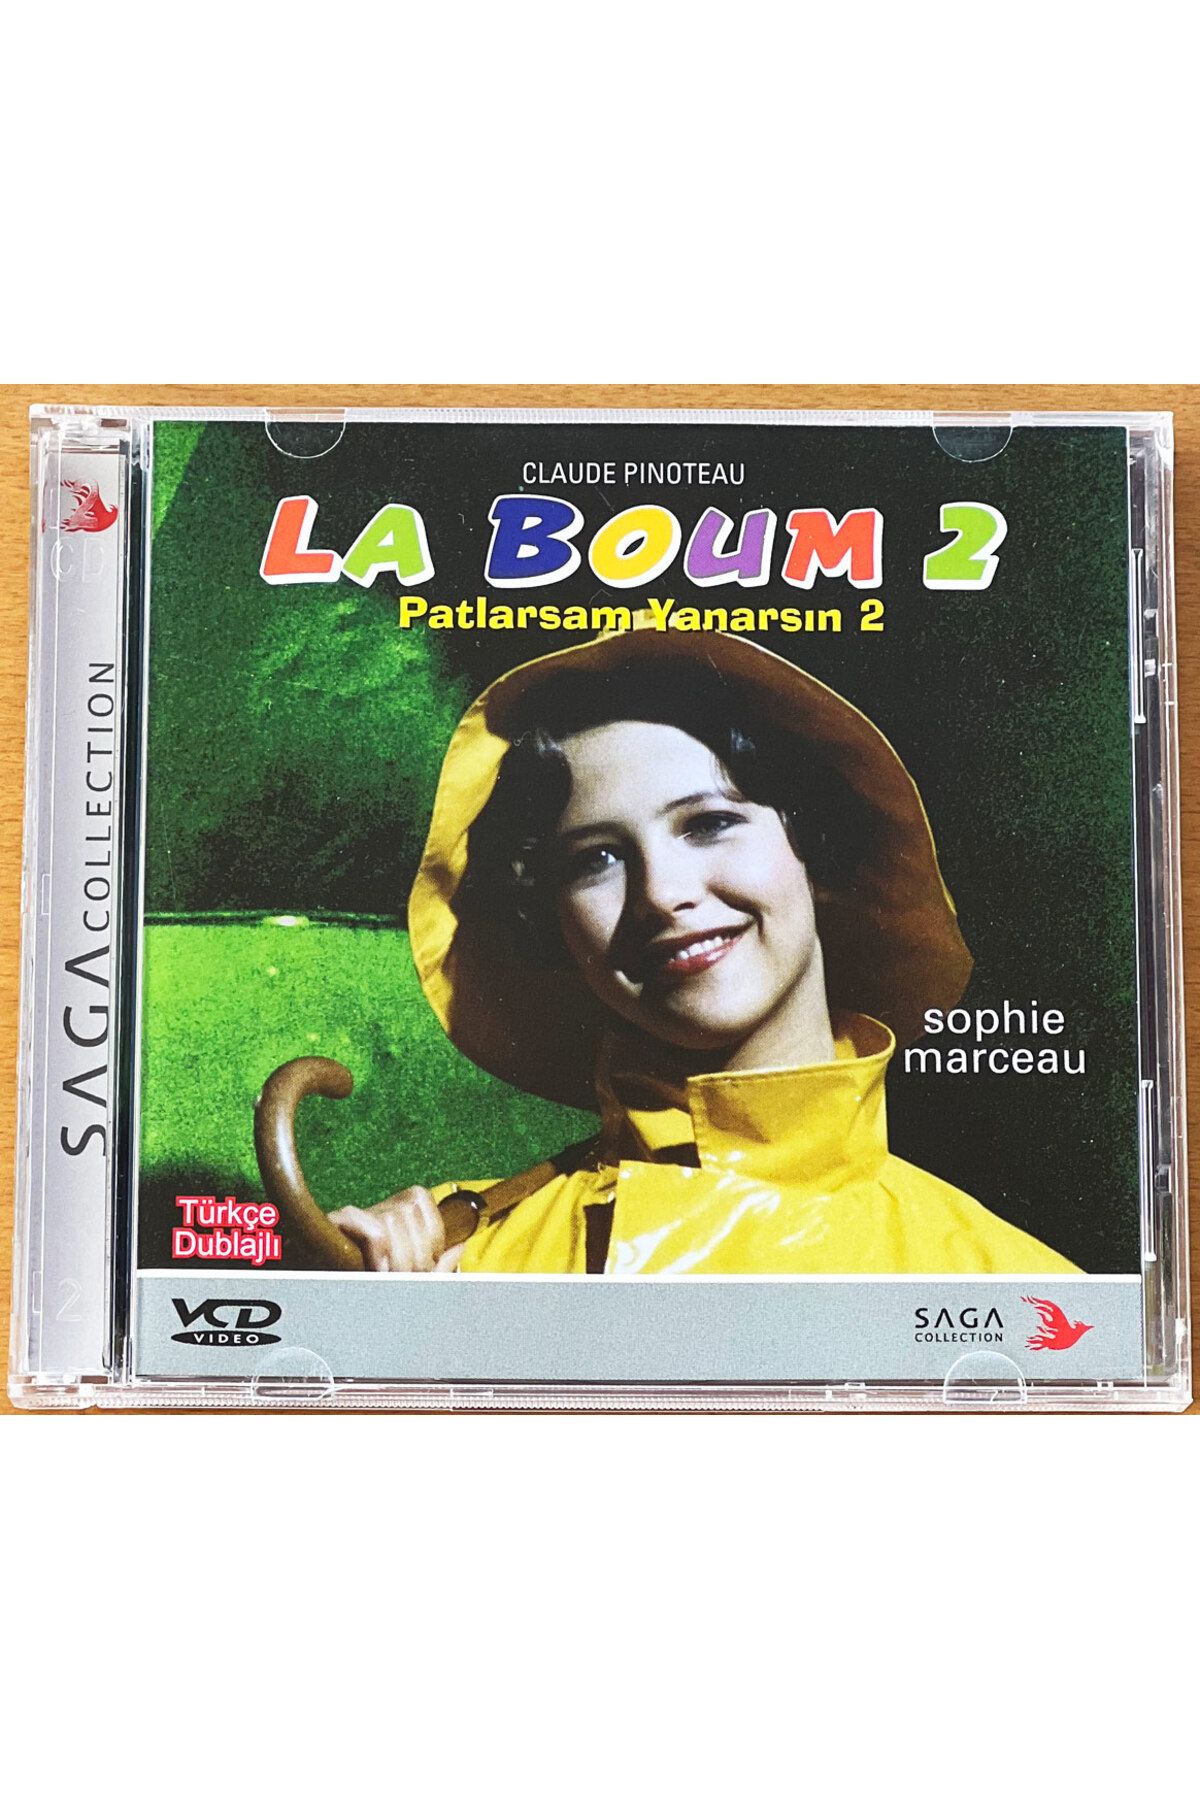 Kovak Kailyn Patlarsam Yanarsın 2 - La Boum 2 (1982)  VCD Film ' Sophie Marceau '